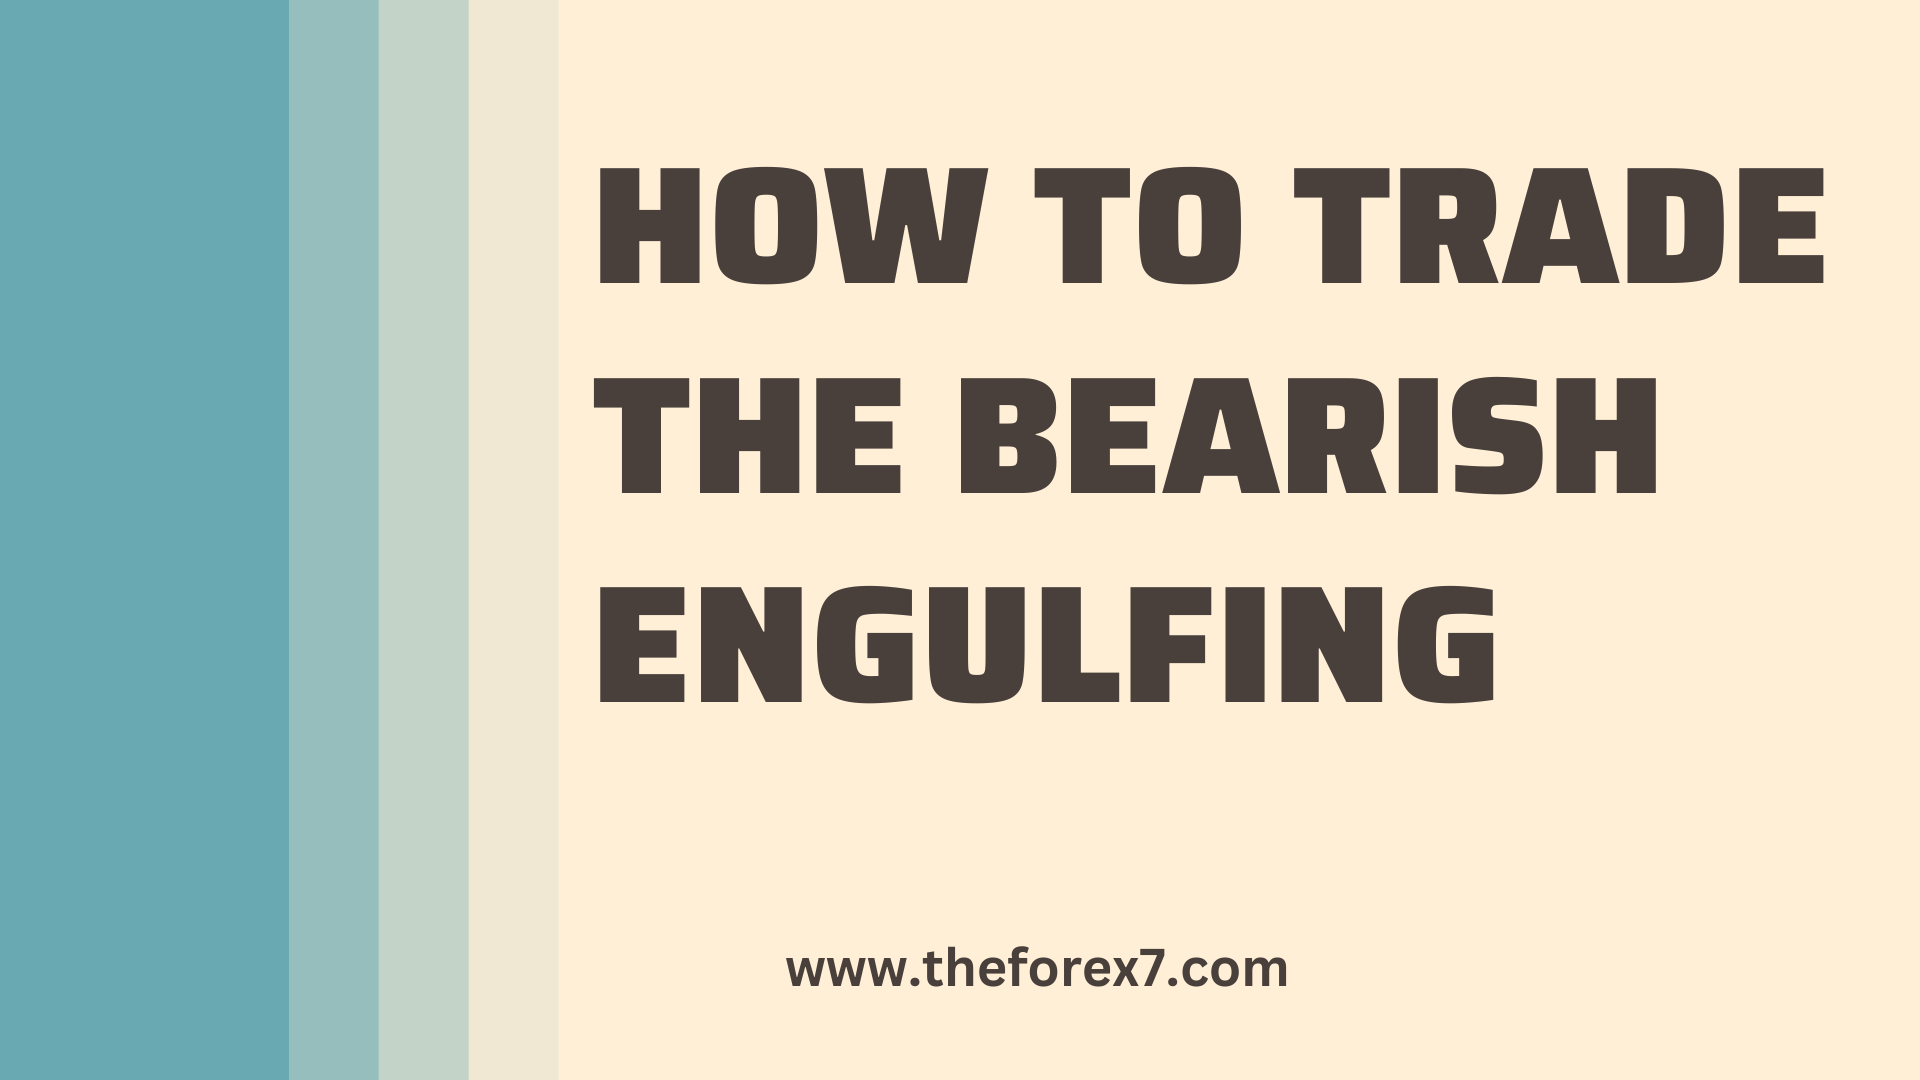 Requirements of  Bearish Engulfing